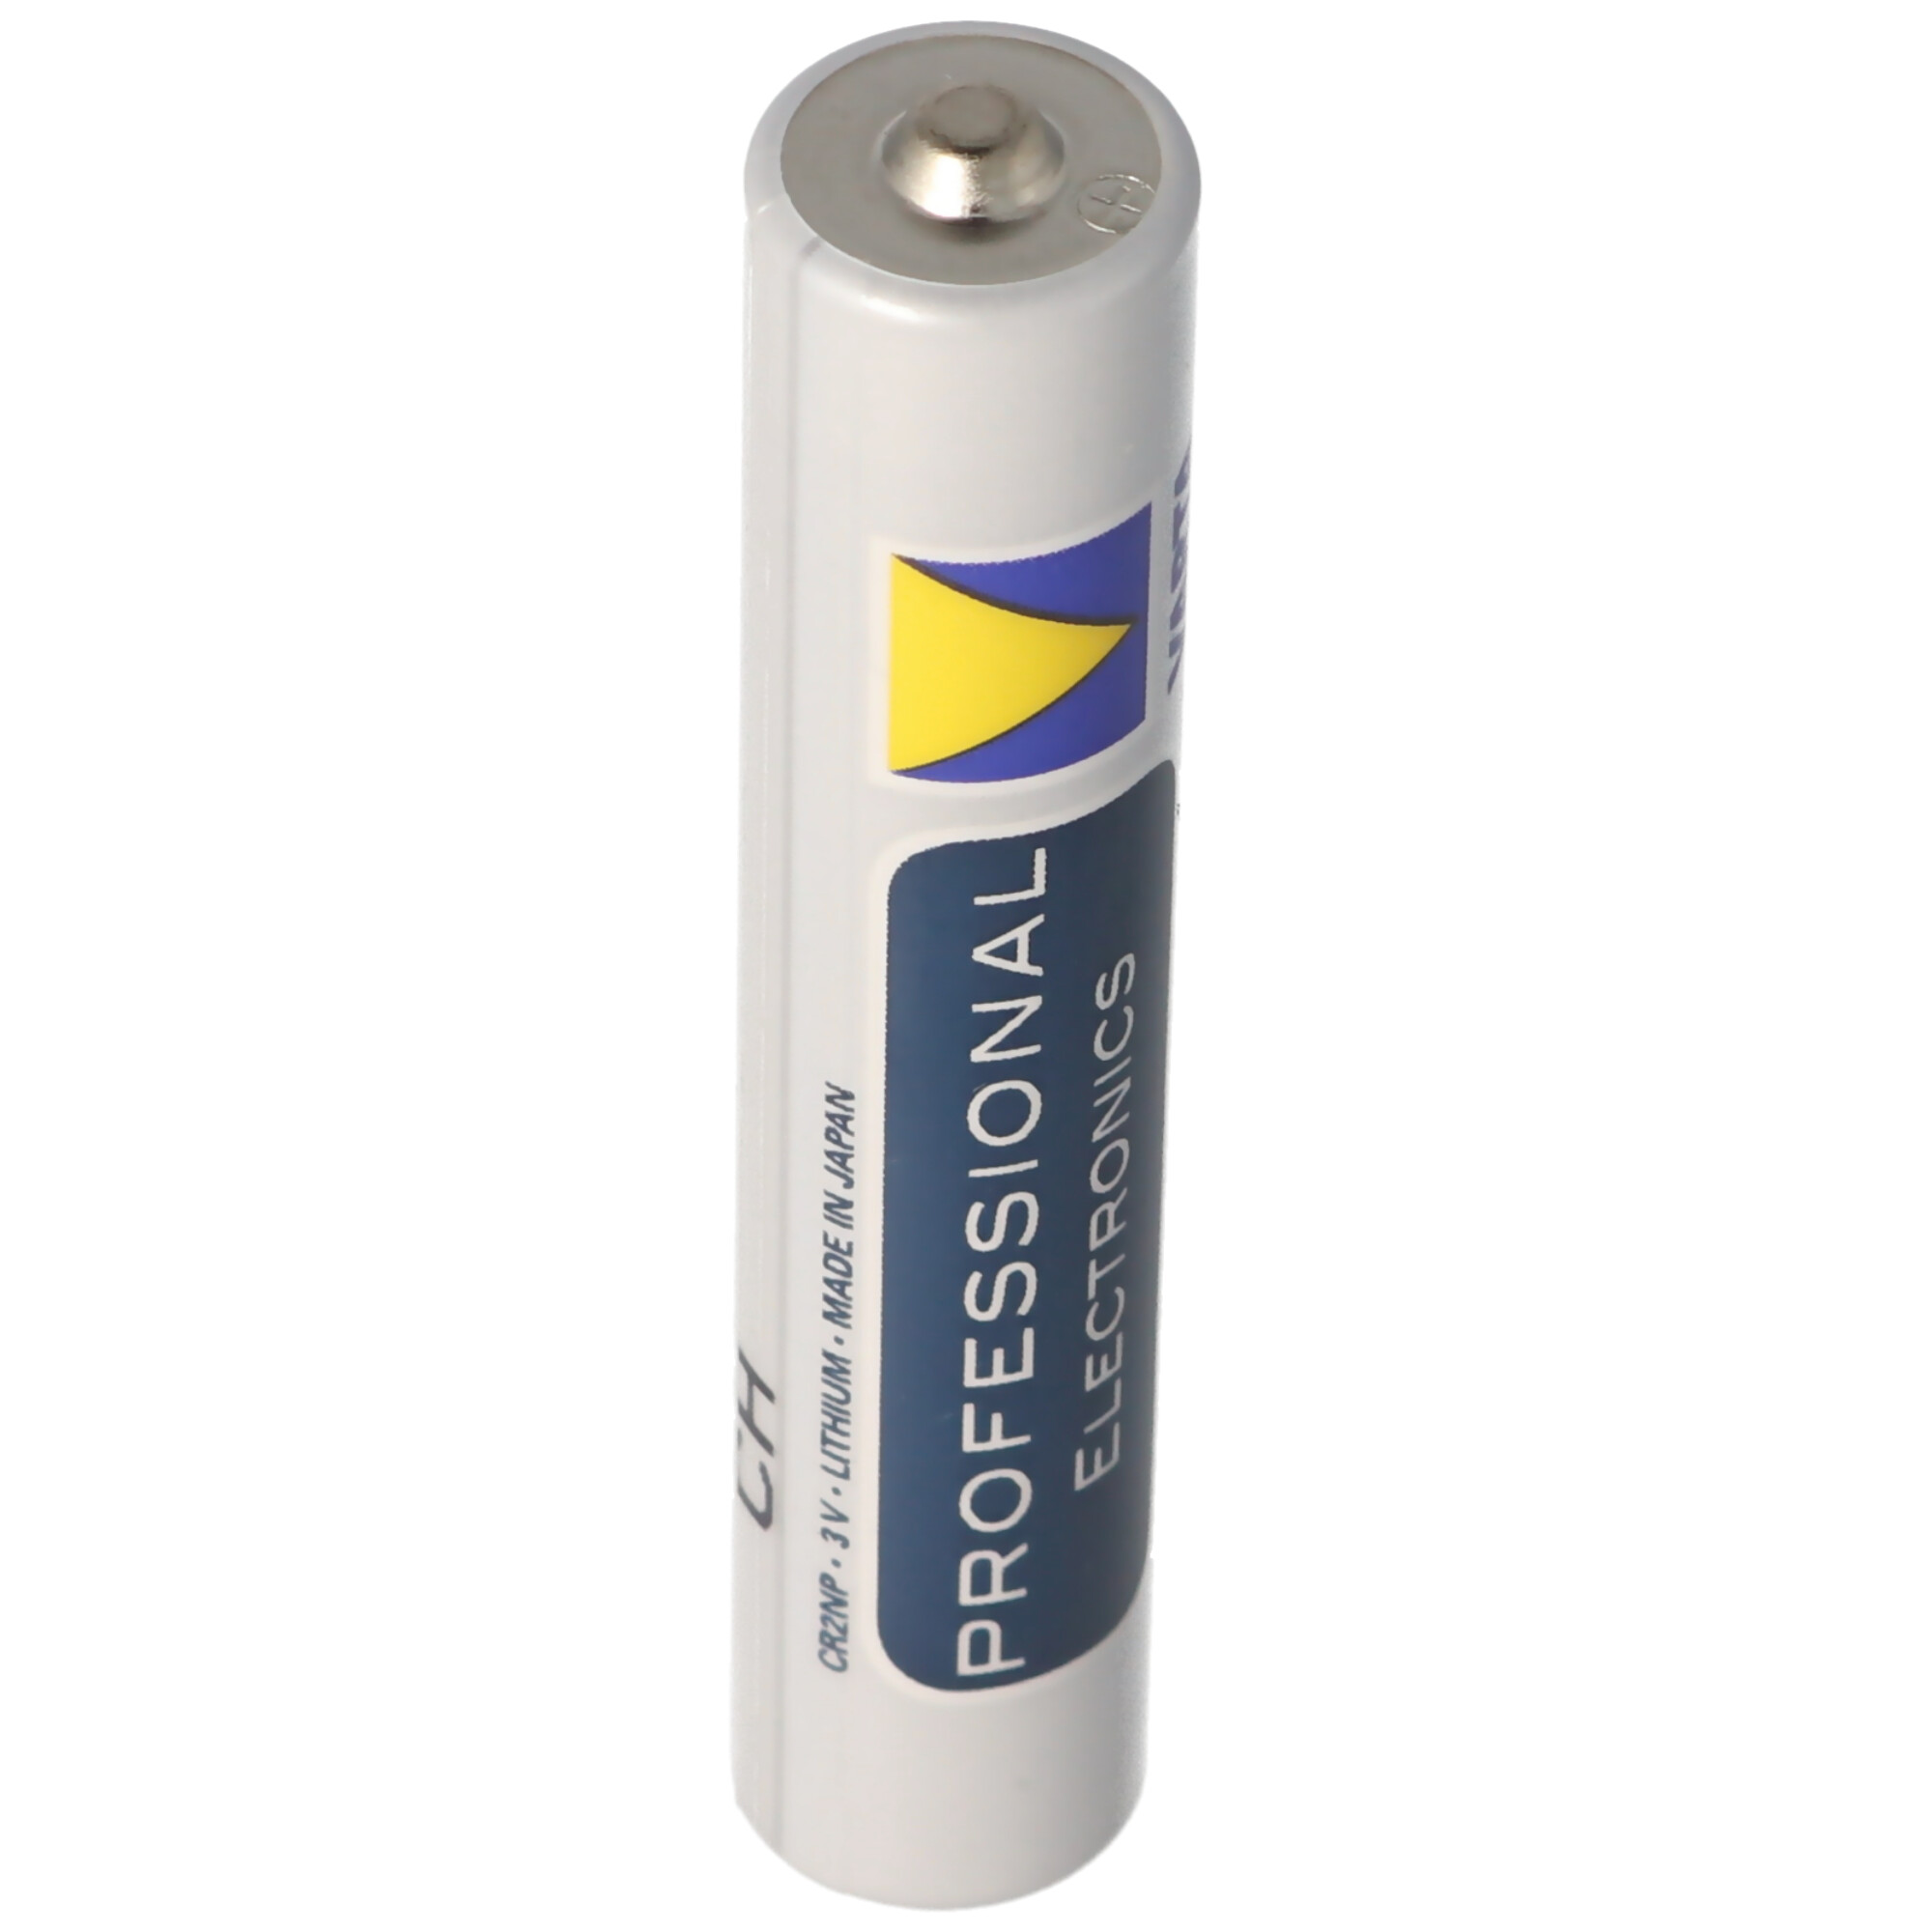 CR2NP Varta Lithium 3V Batterie CR2NP, CR 2NP Professional VKB 6202 101 501